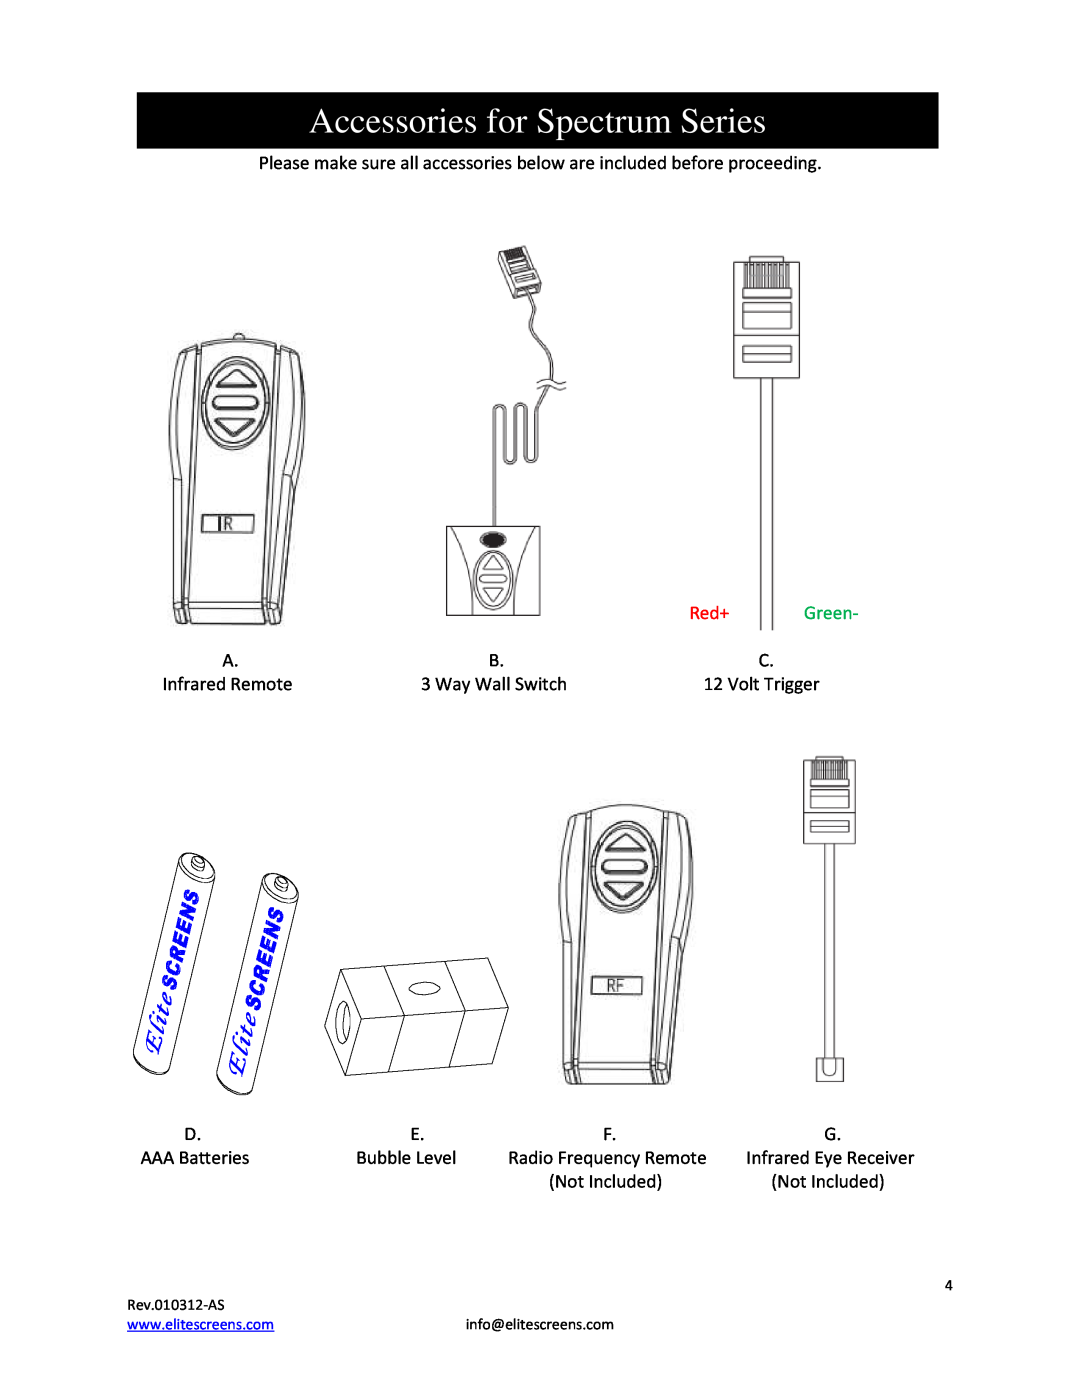 Elite Screens manual Accessories for Spectrum Series, Red+, Green, AAA Batteries, Rev.010312-AS 